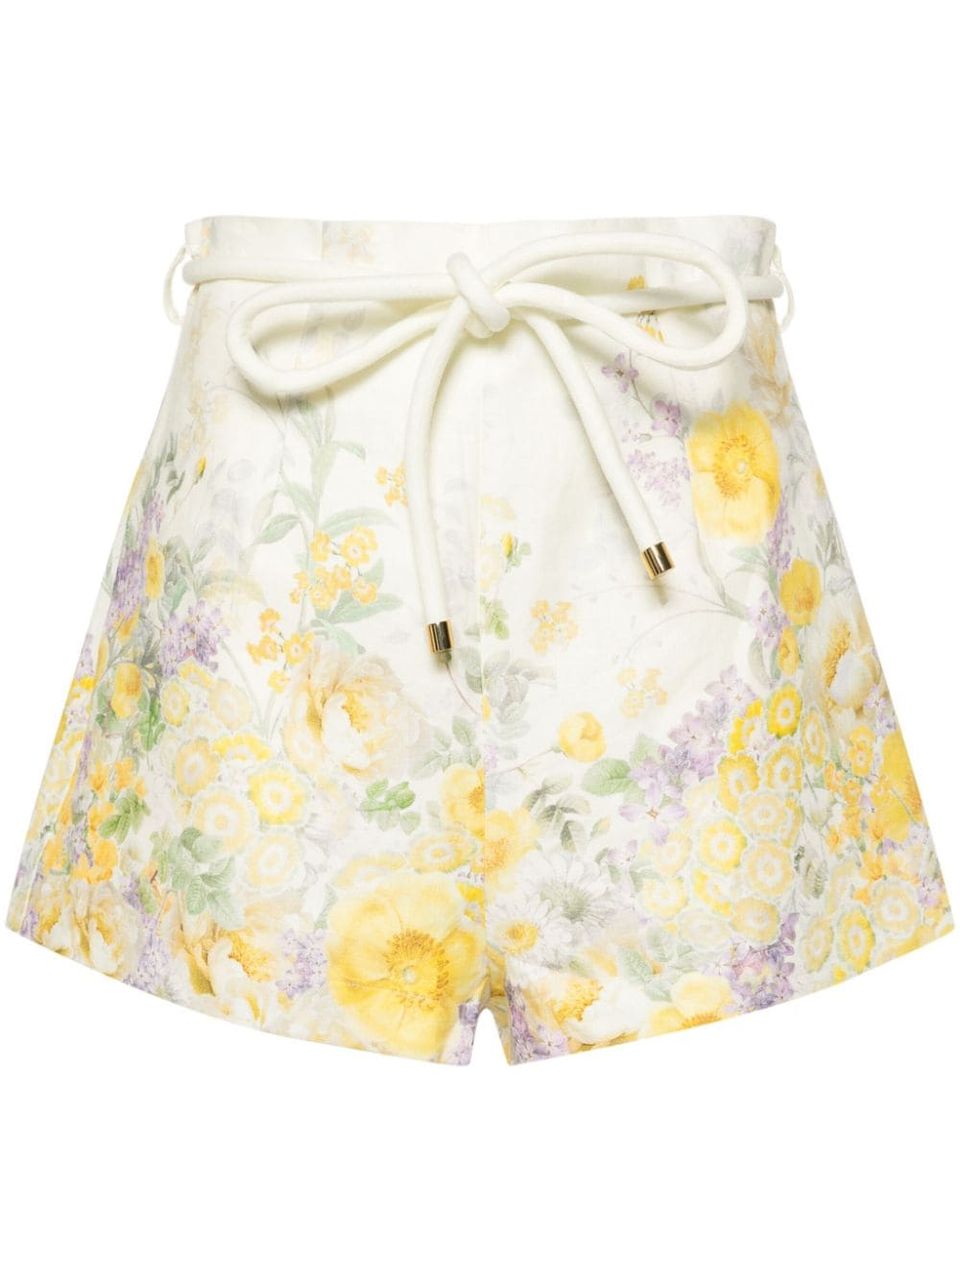 High-waisted Harmony shorts with Citrus Garden print